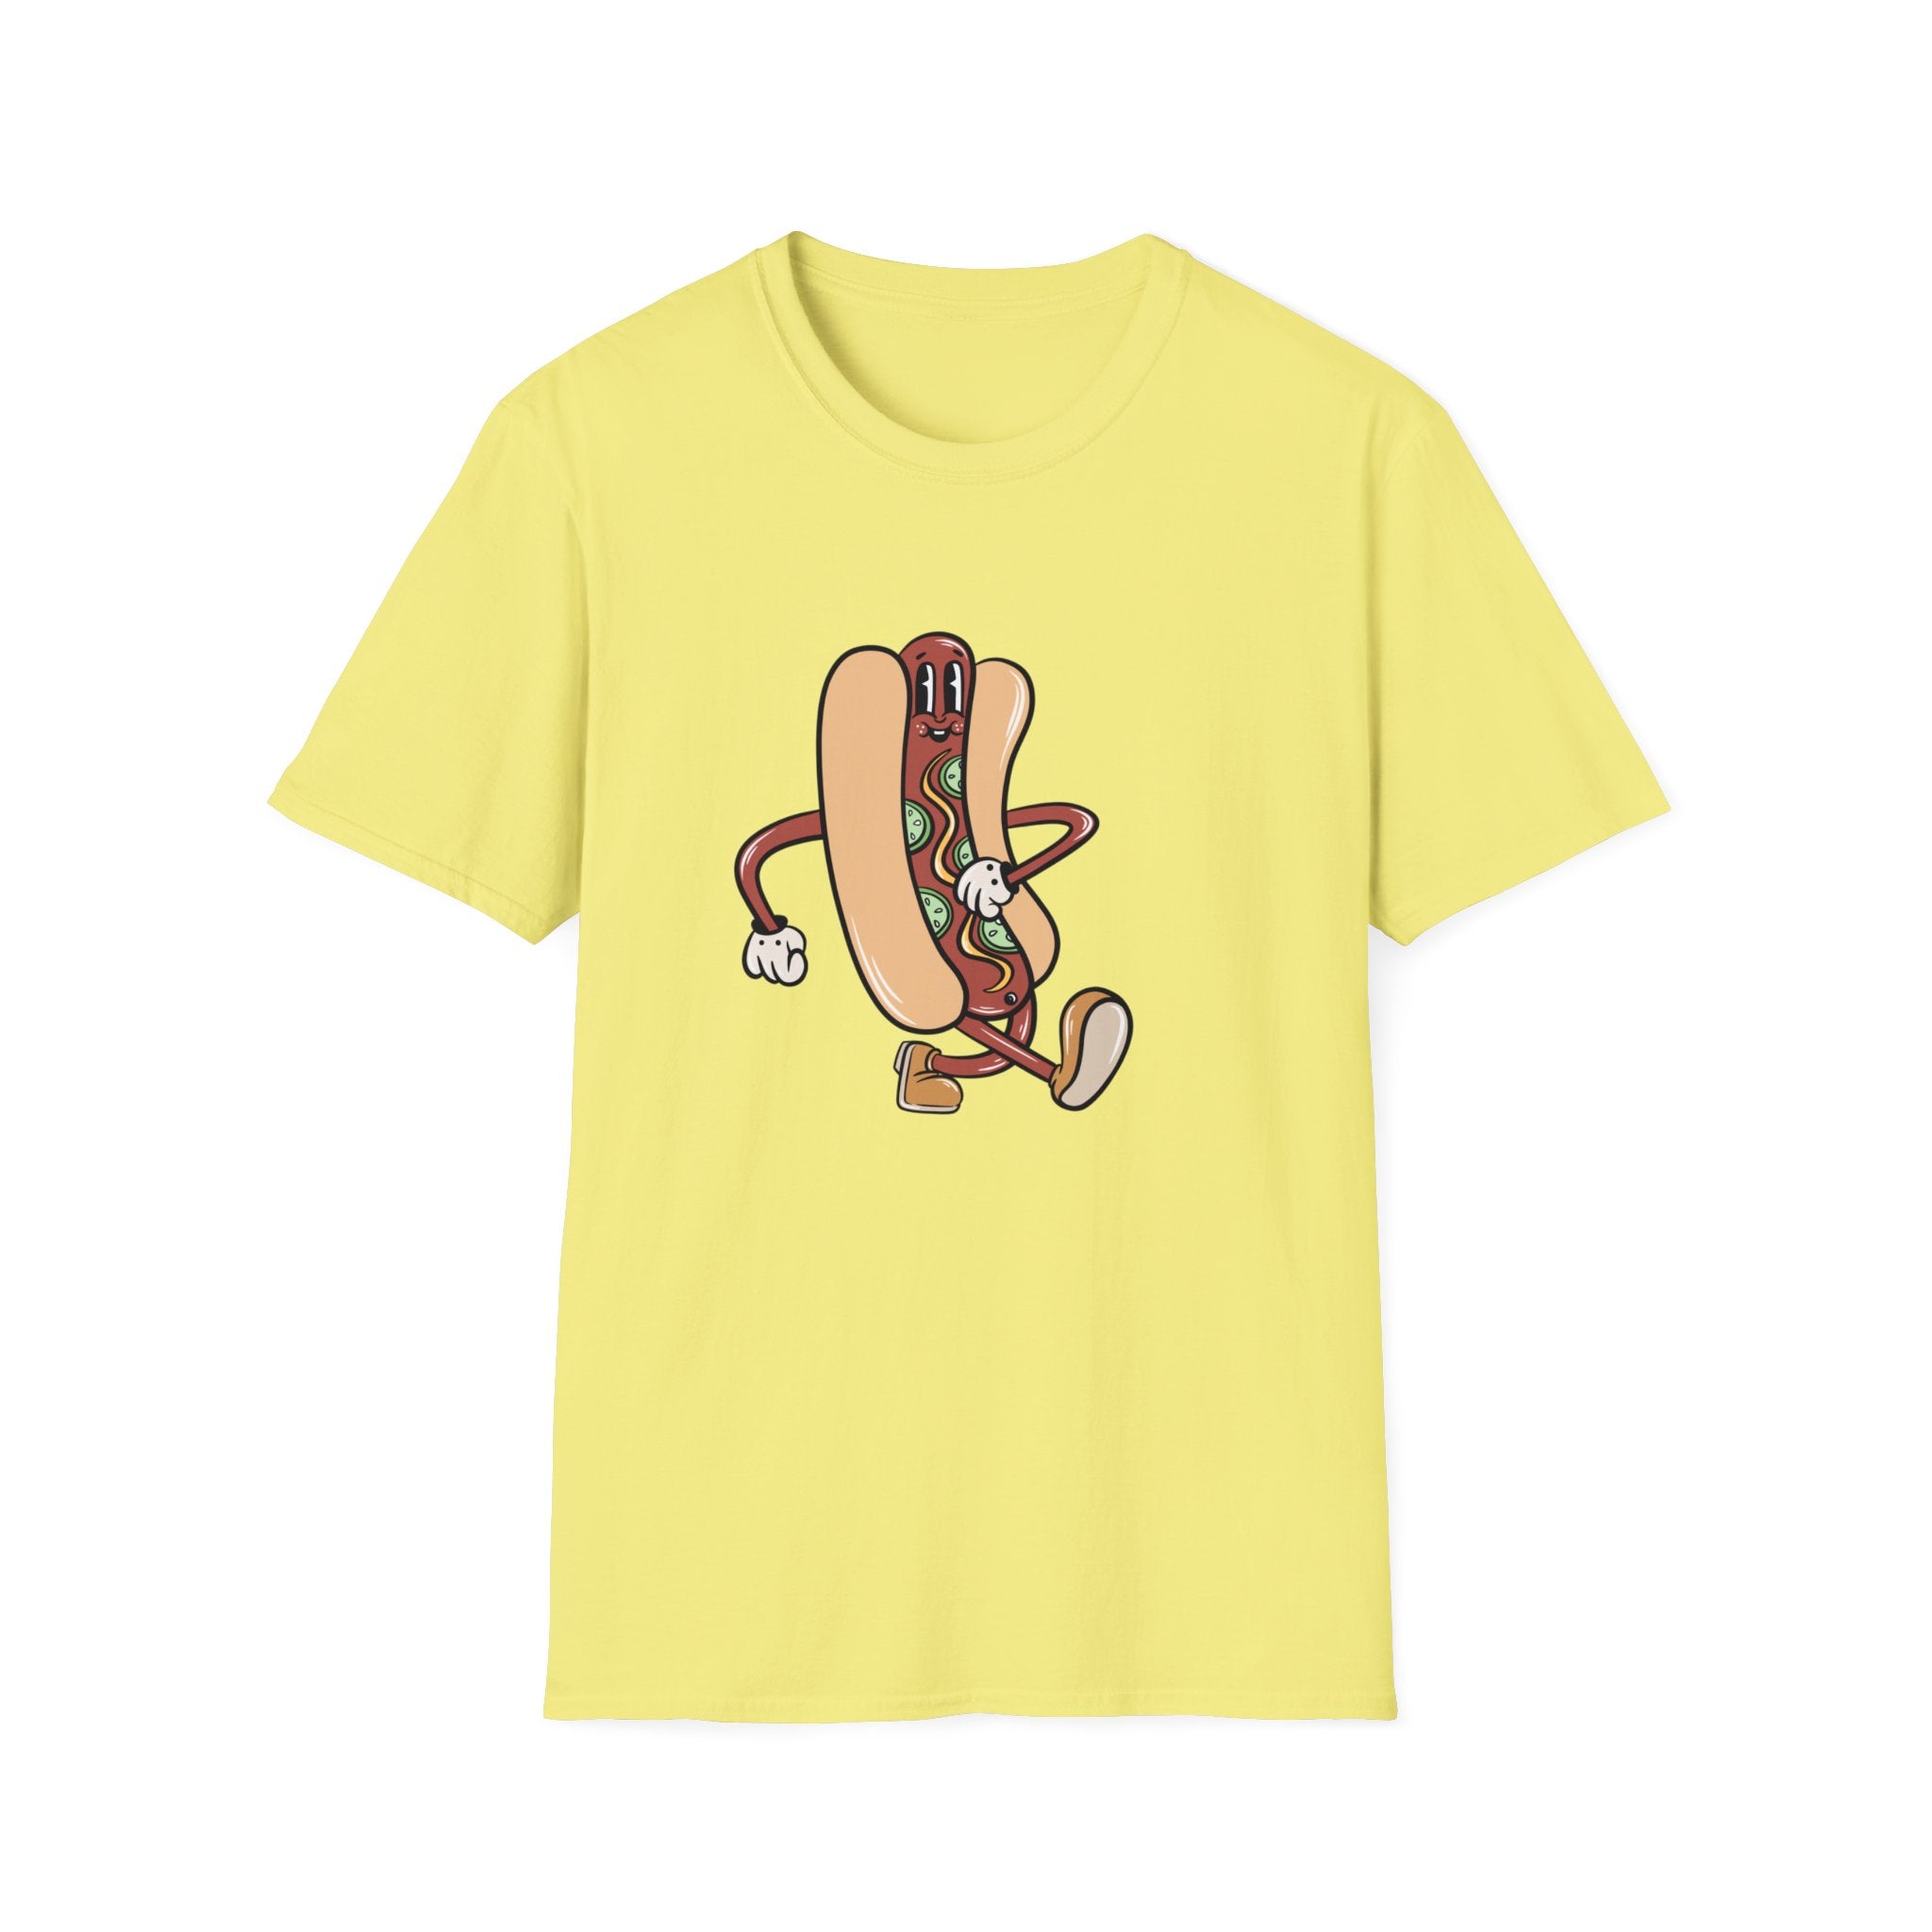 Hotdog Cartoon T-Shirt